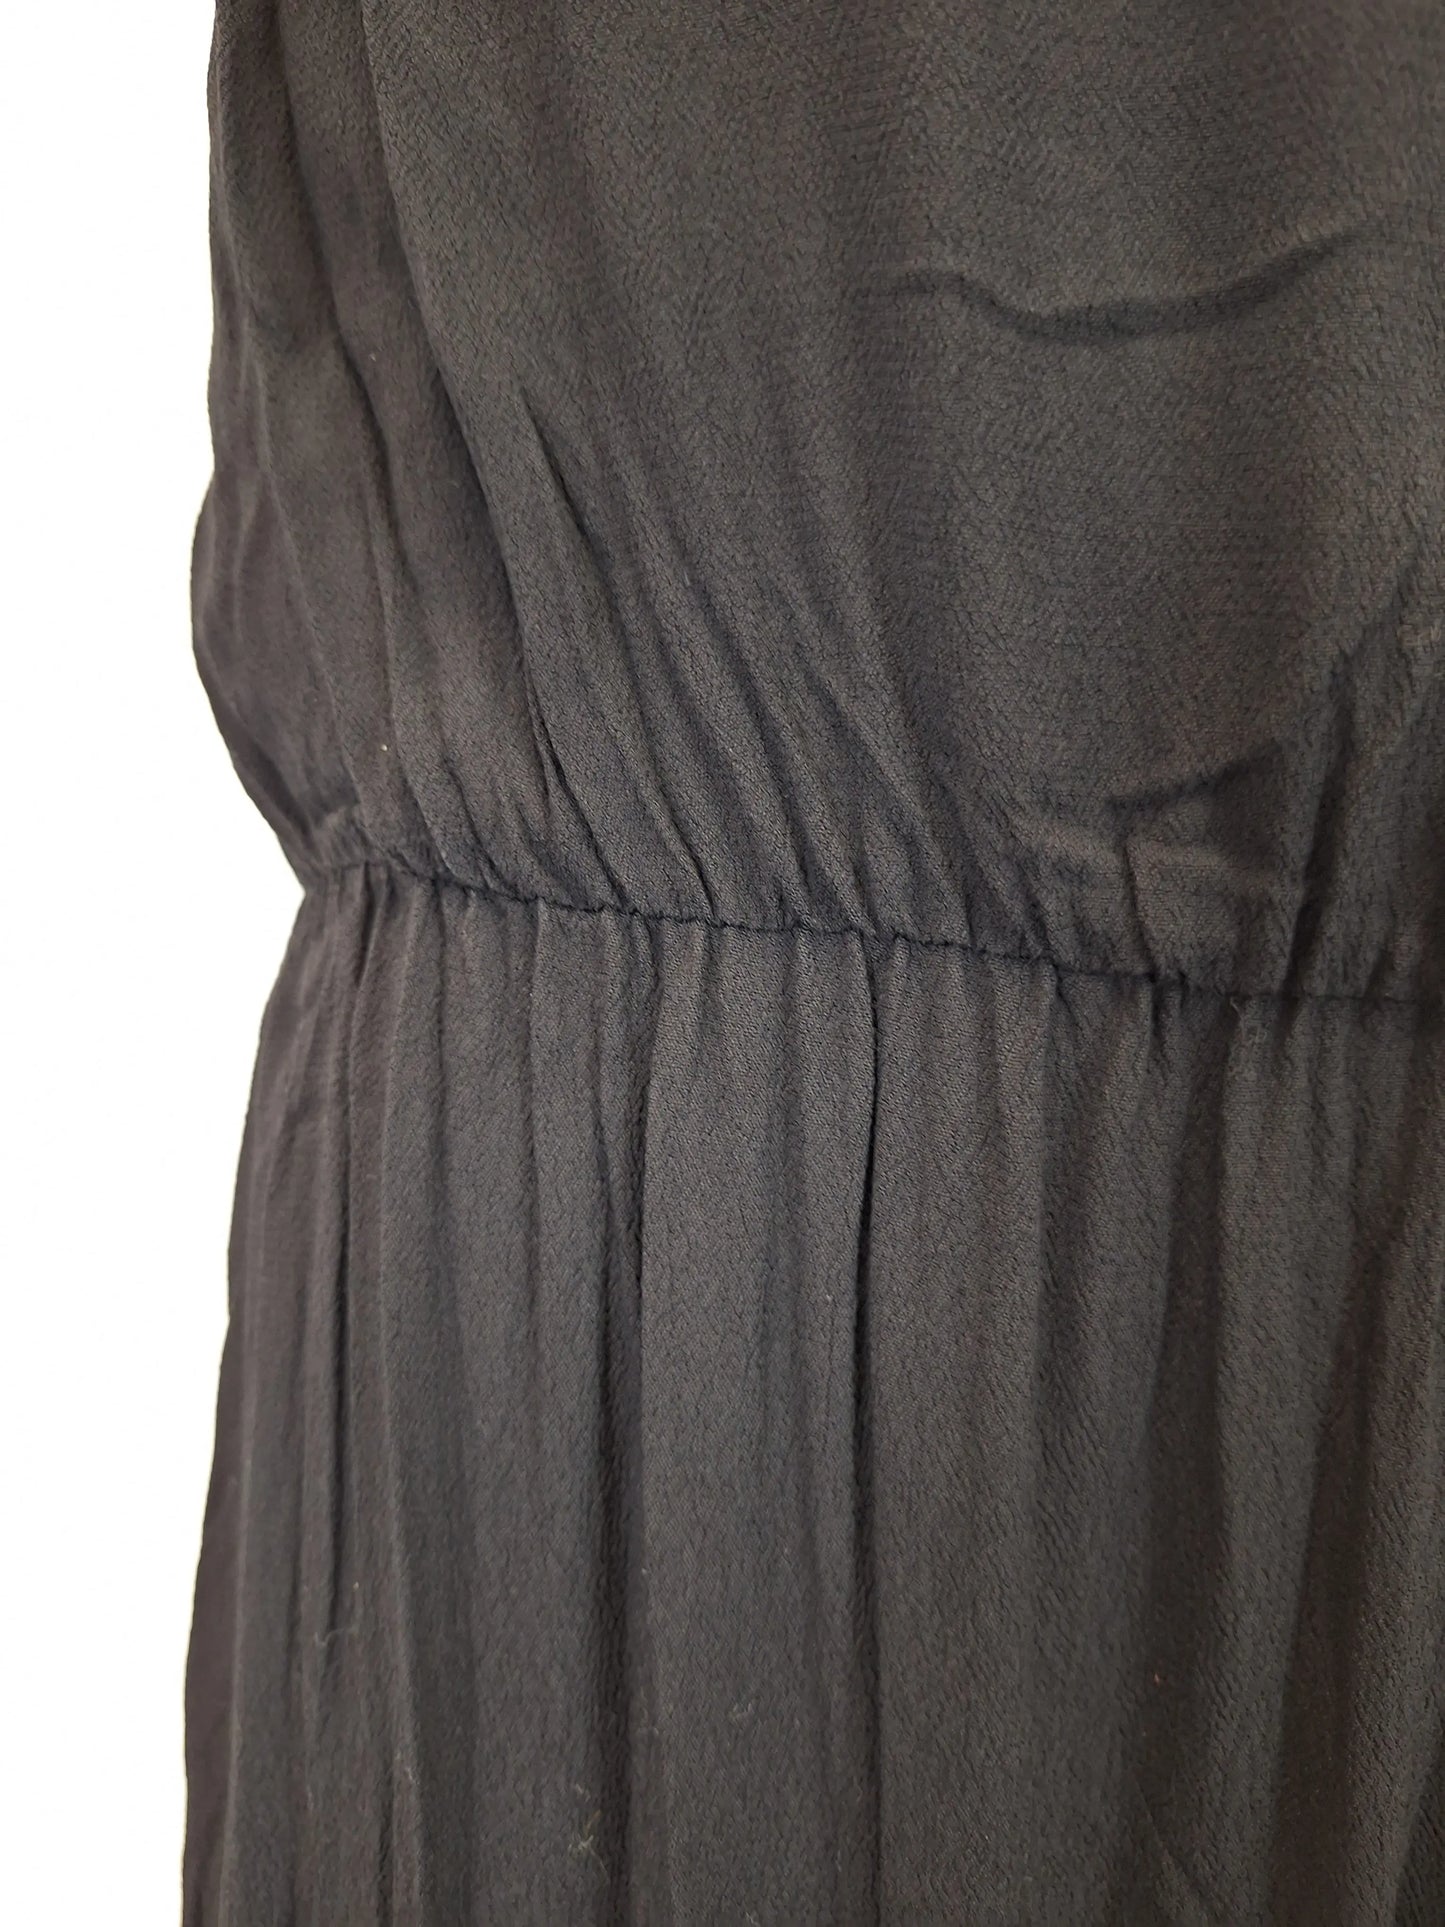 Natasha Gan Black Minimalist Ruffle Midi Dress Size 12 by SwapUp-Online Second Hand Store-Online Thrift Store